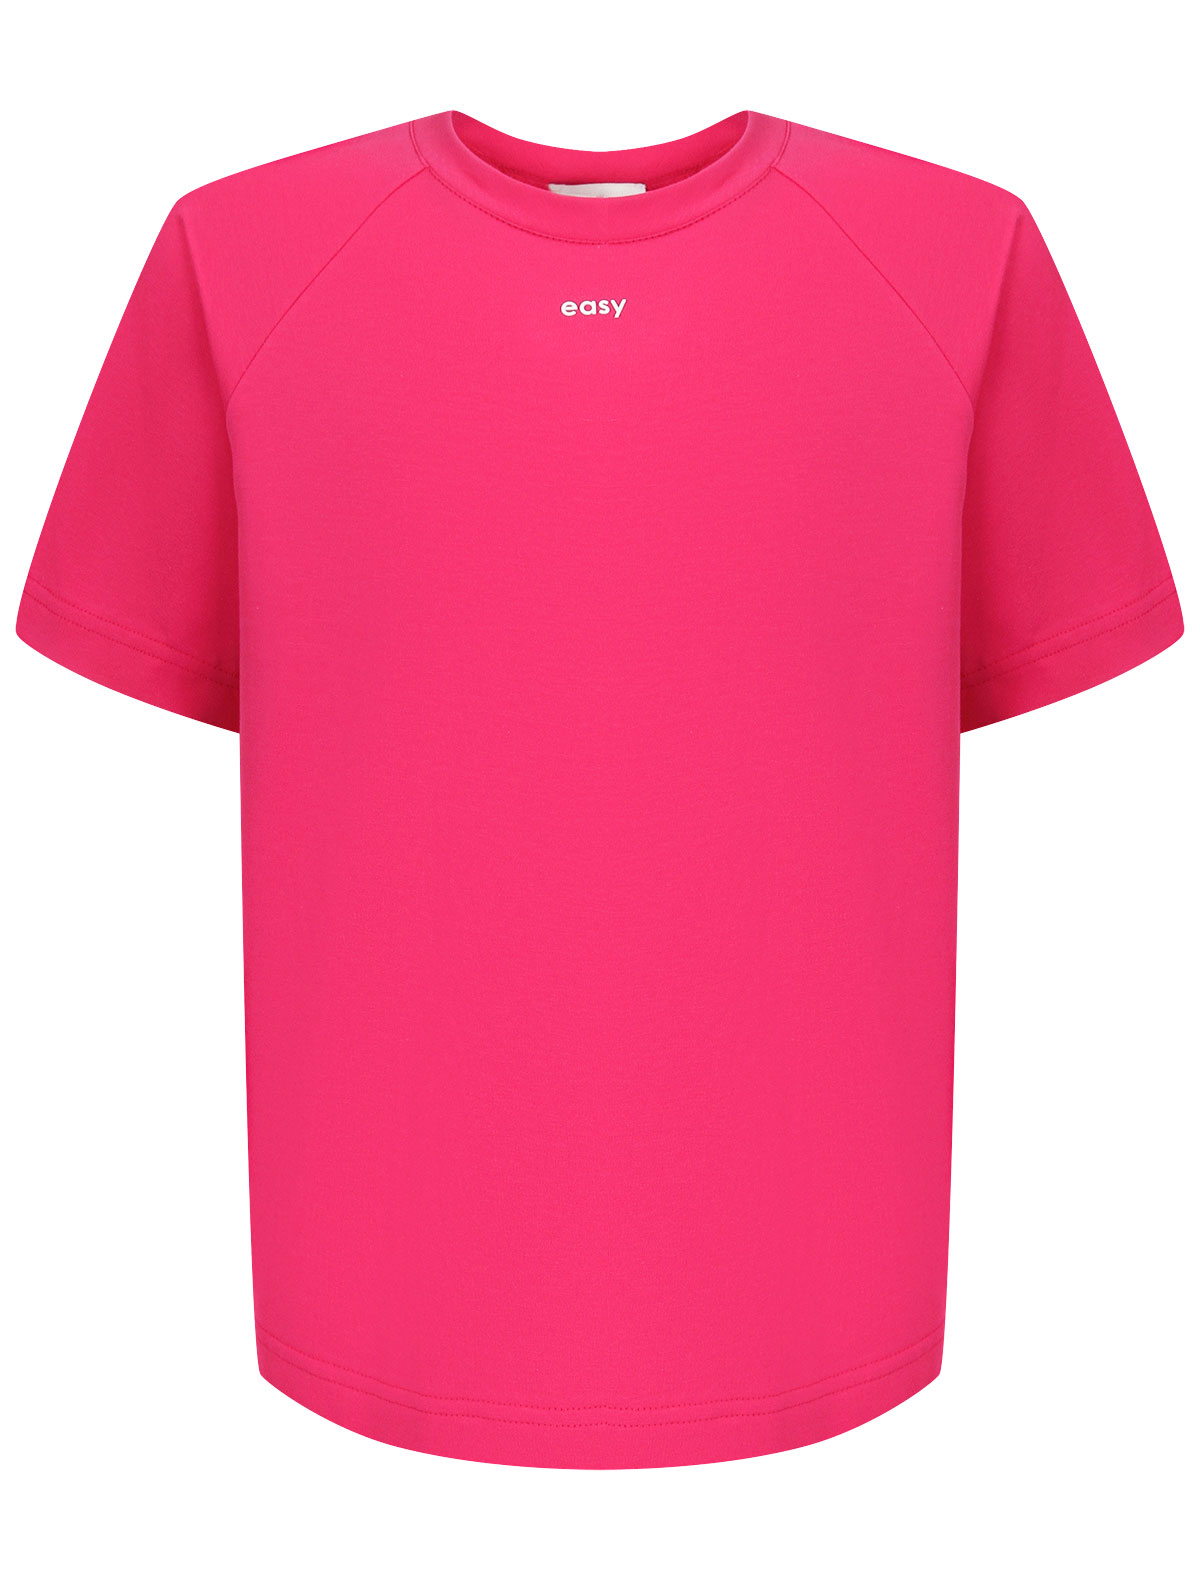 Футболка SILVER SPOON 2651012, цвет розовый, размер 13 1134529410411 - фото 1